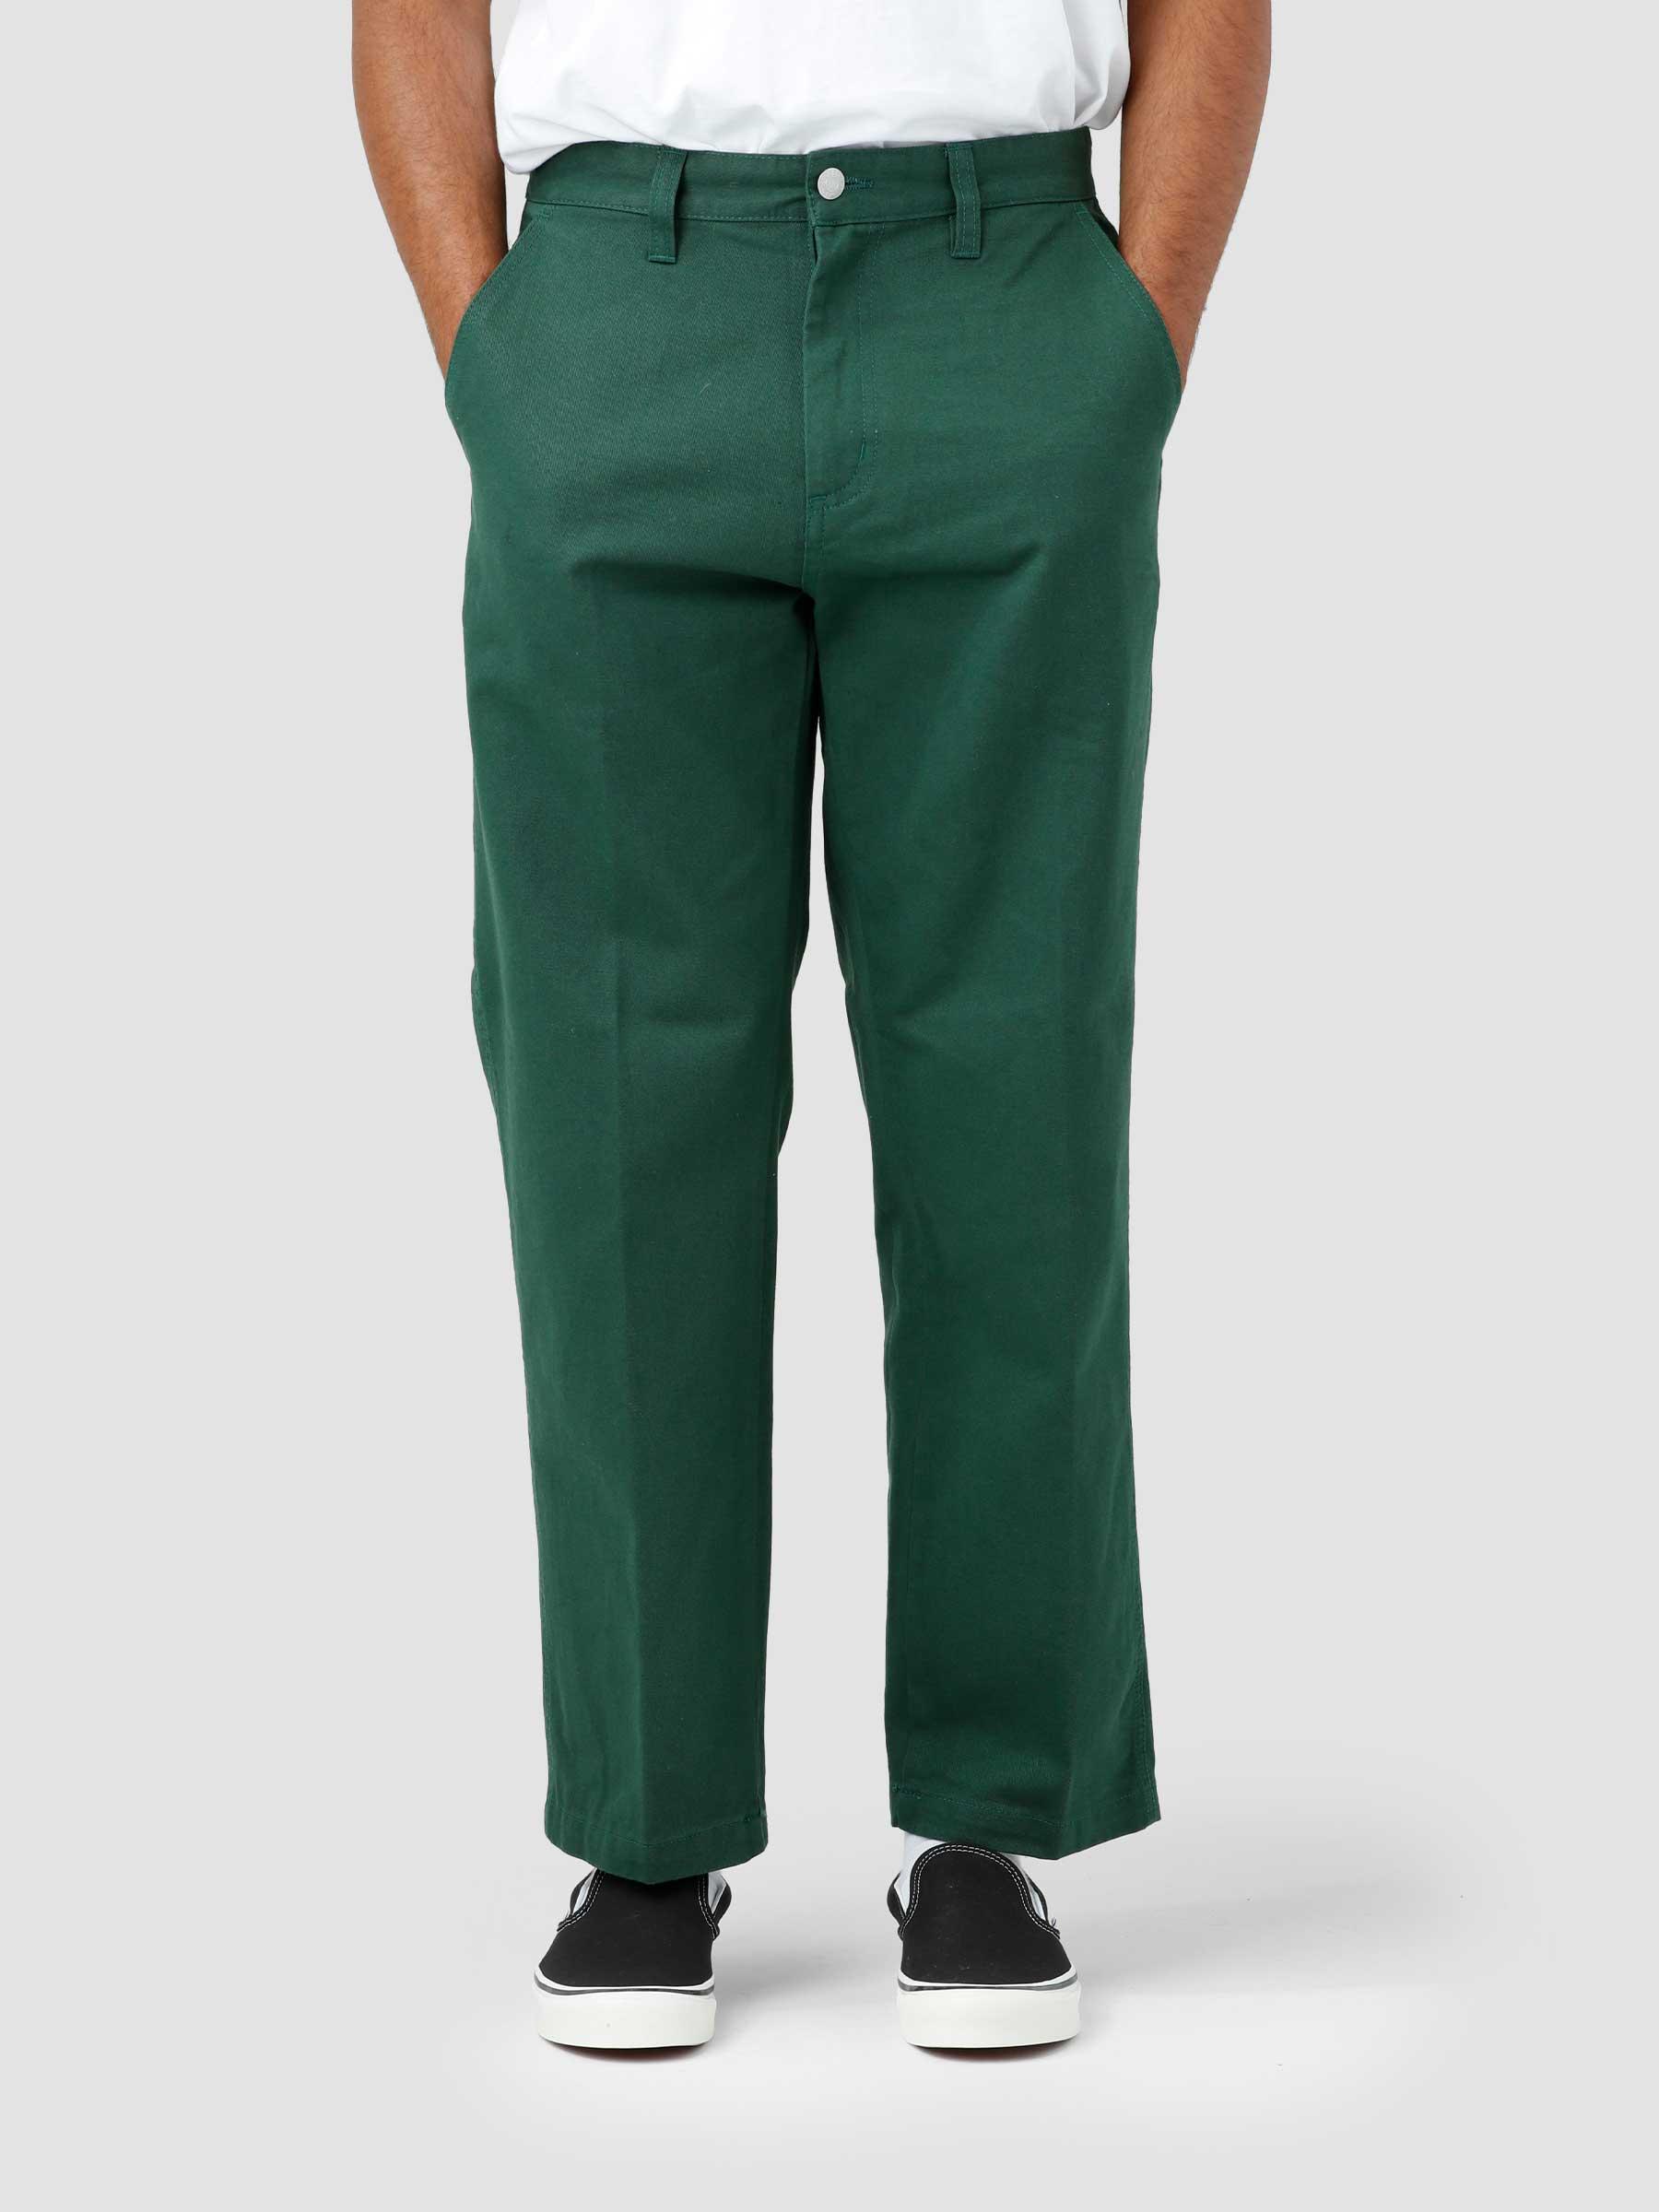 No Boundaries Canvas Carpenter Pants Size 36X31 Green 100% Cotton Workwear